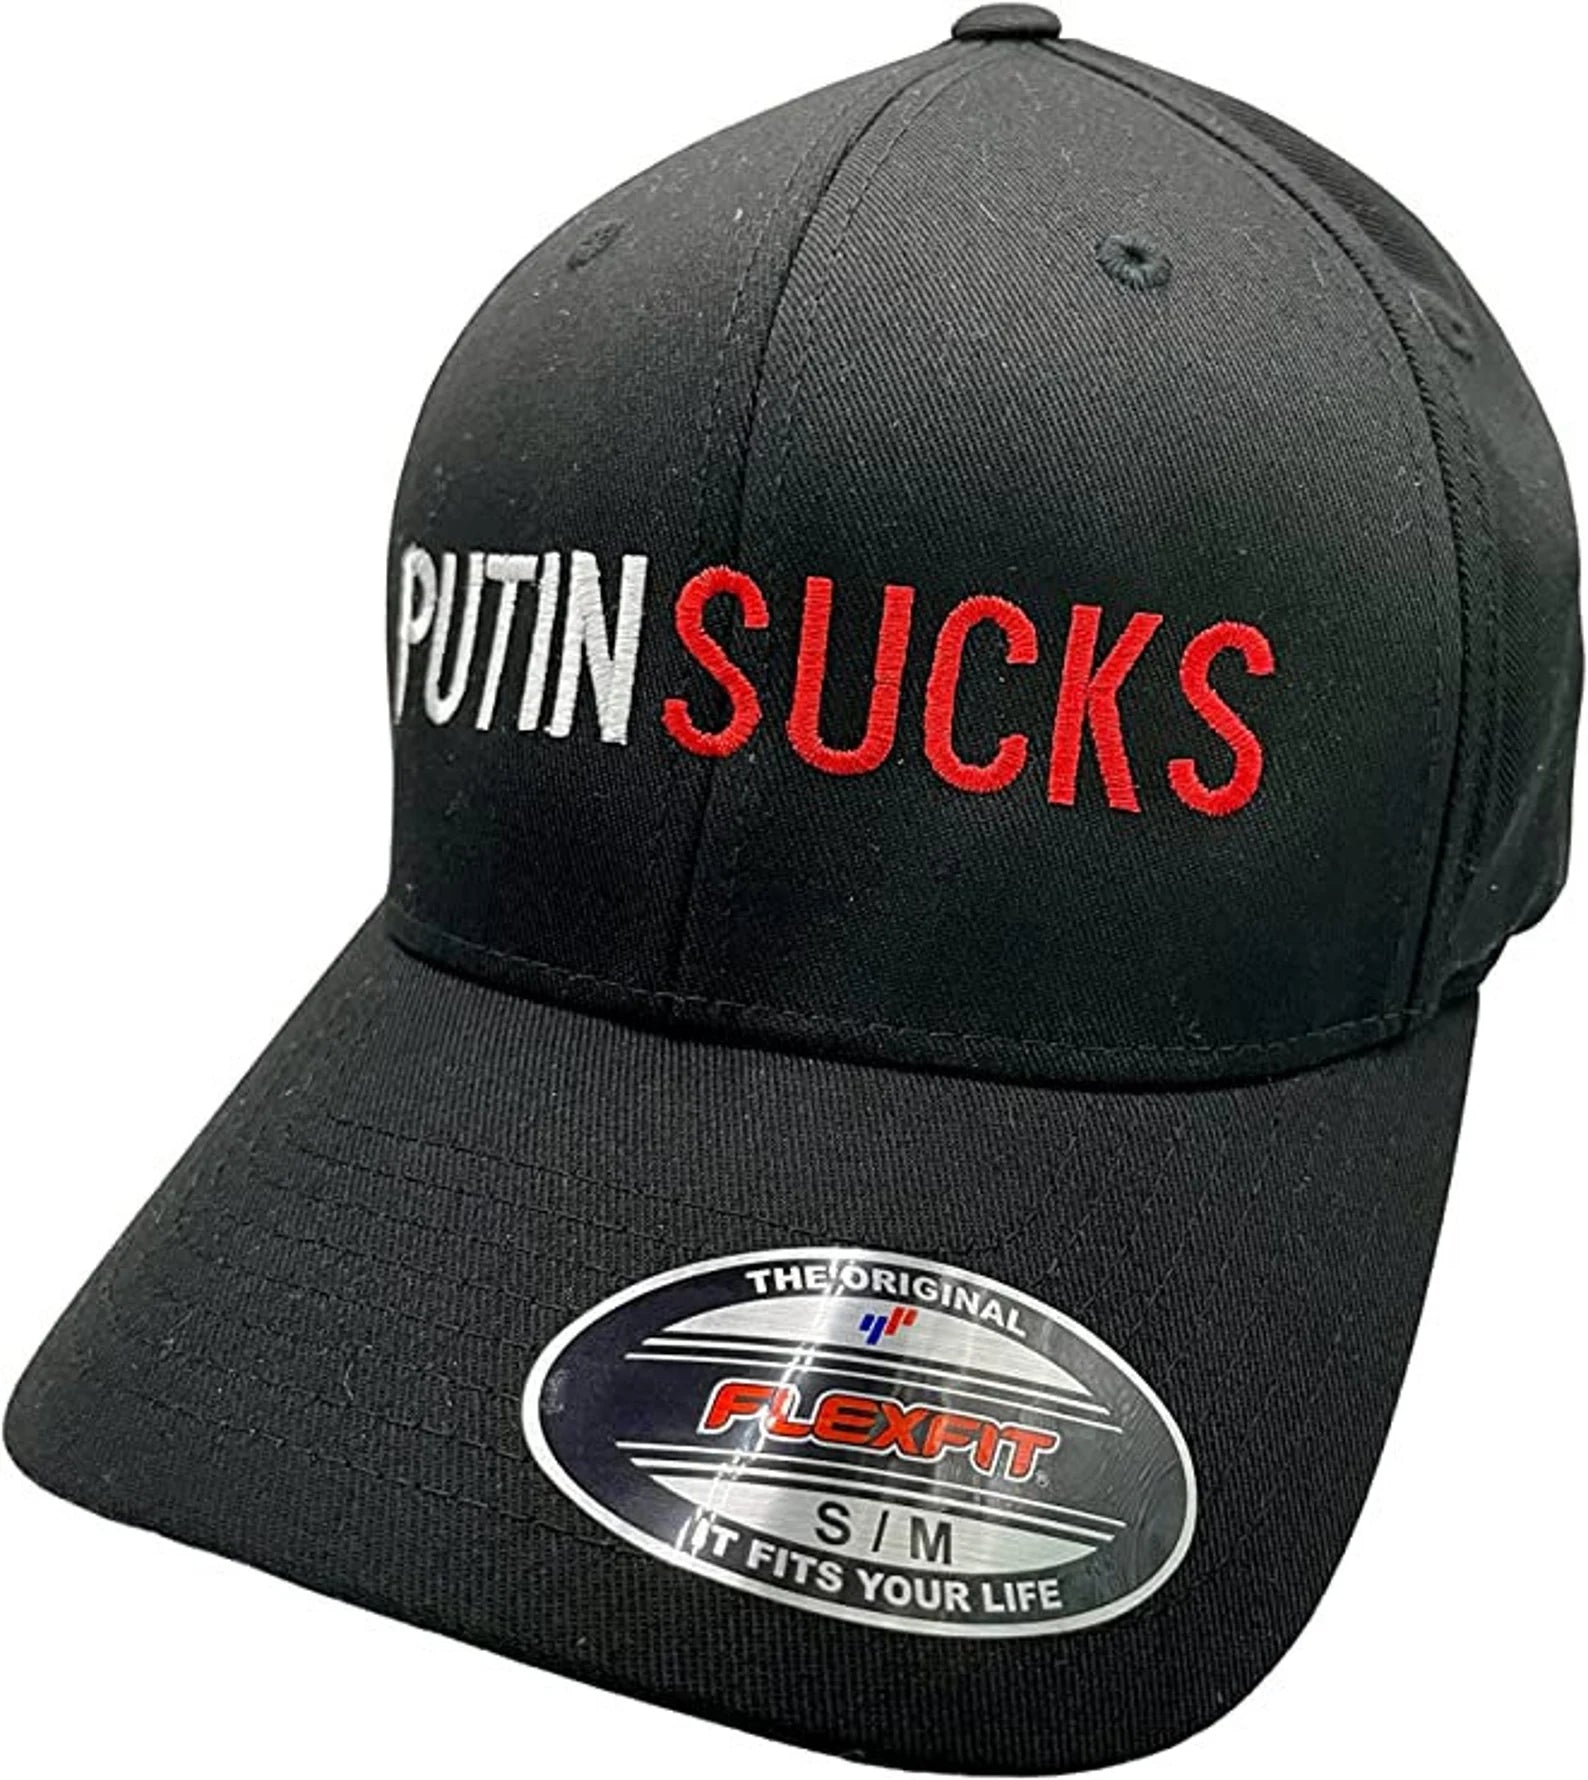 Putin Sucks - Black, Flex Fit, Fitted Hat by Pats Hats